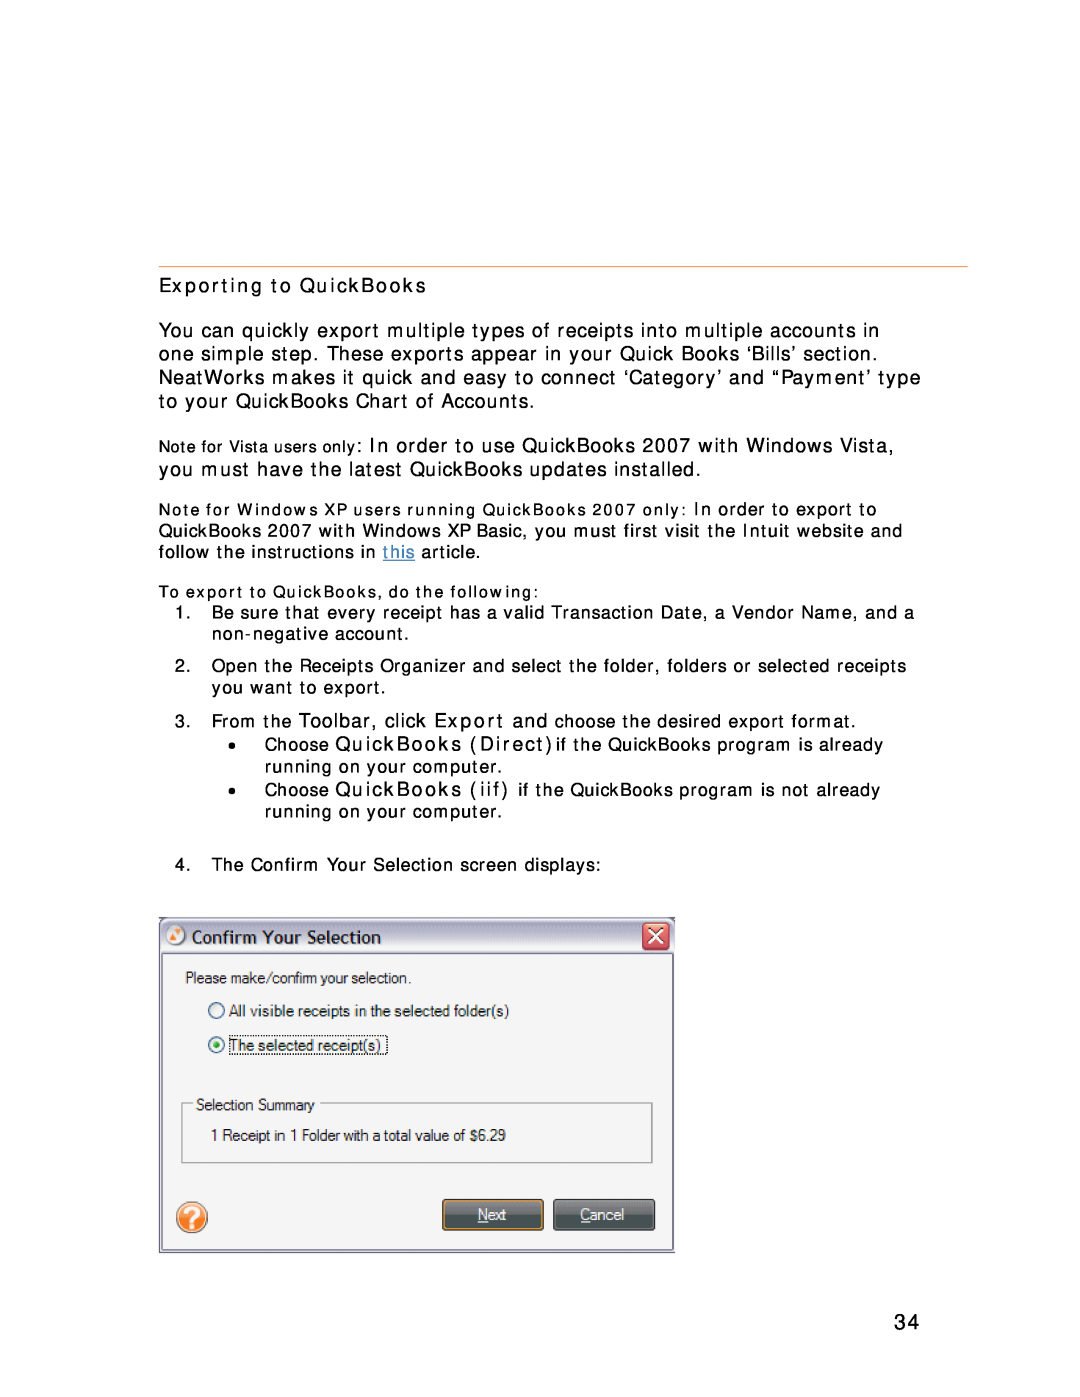 Univex NeatReceipts, NeatScan, NeatDesk manual Exporting to QuickBooks 